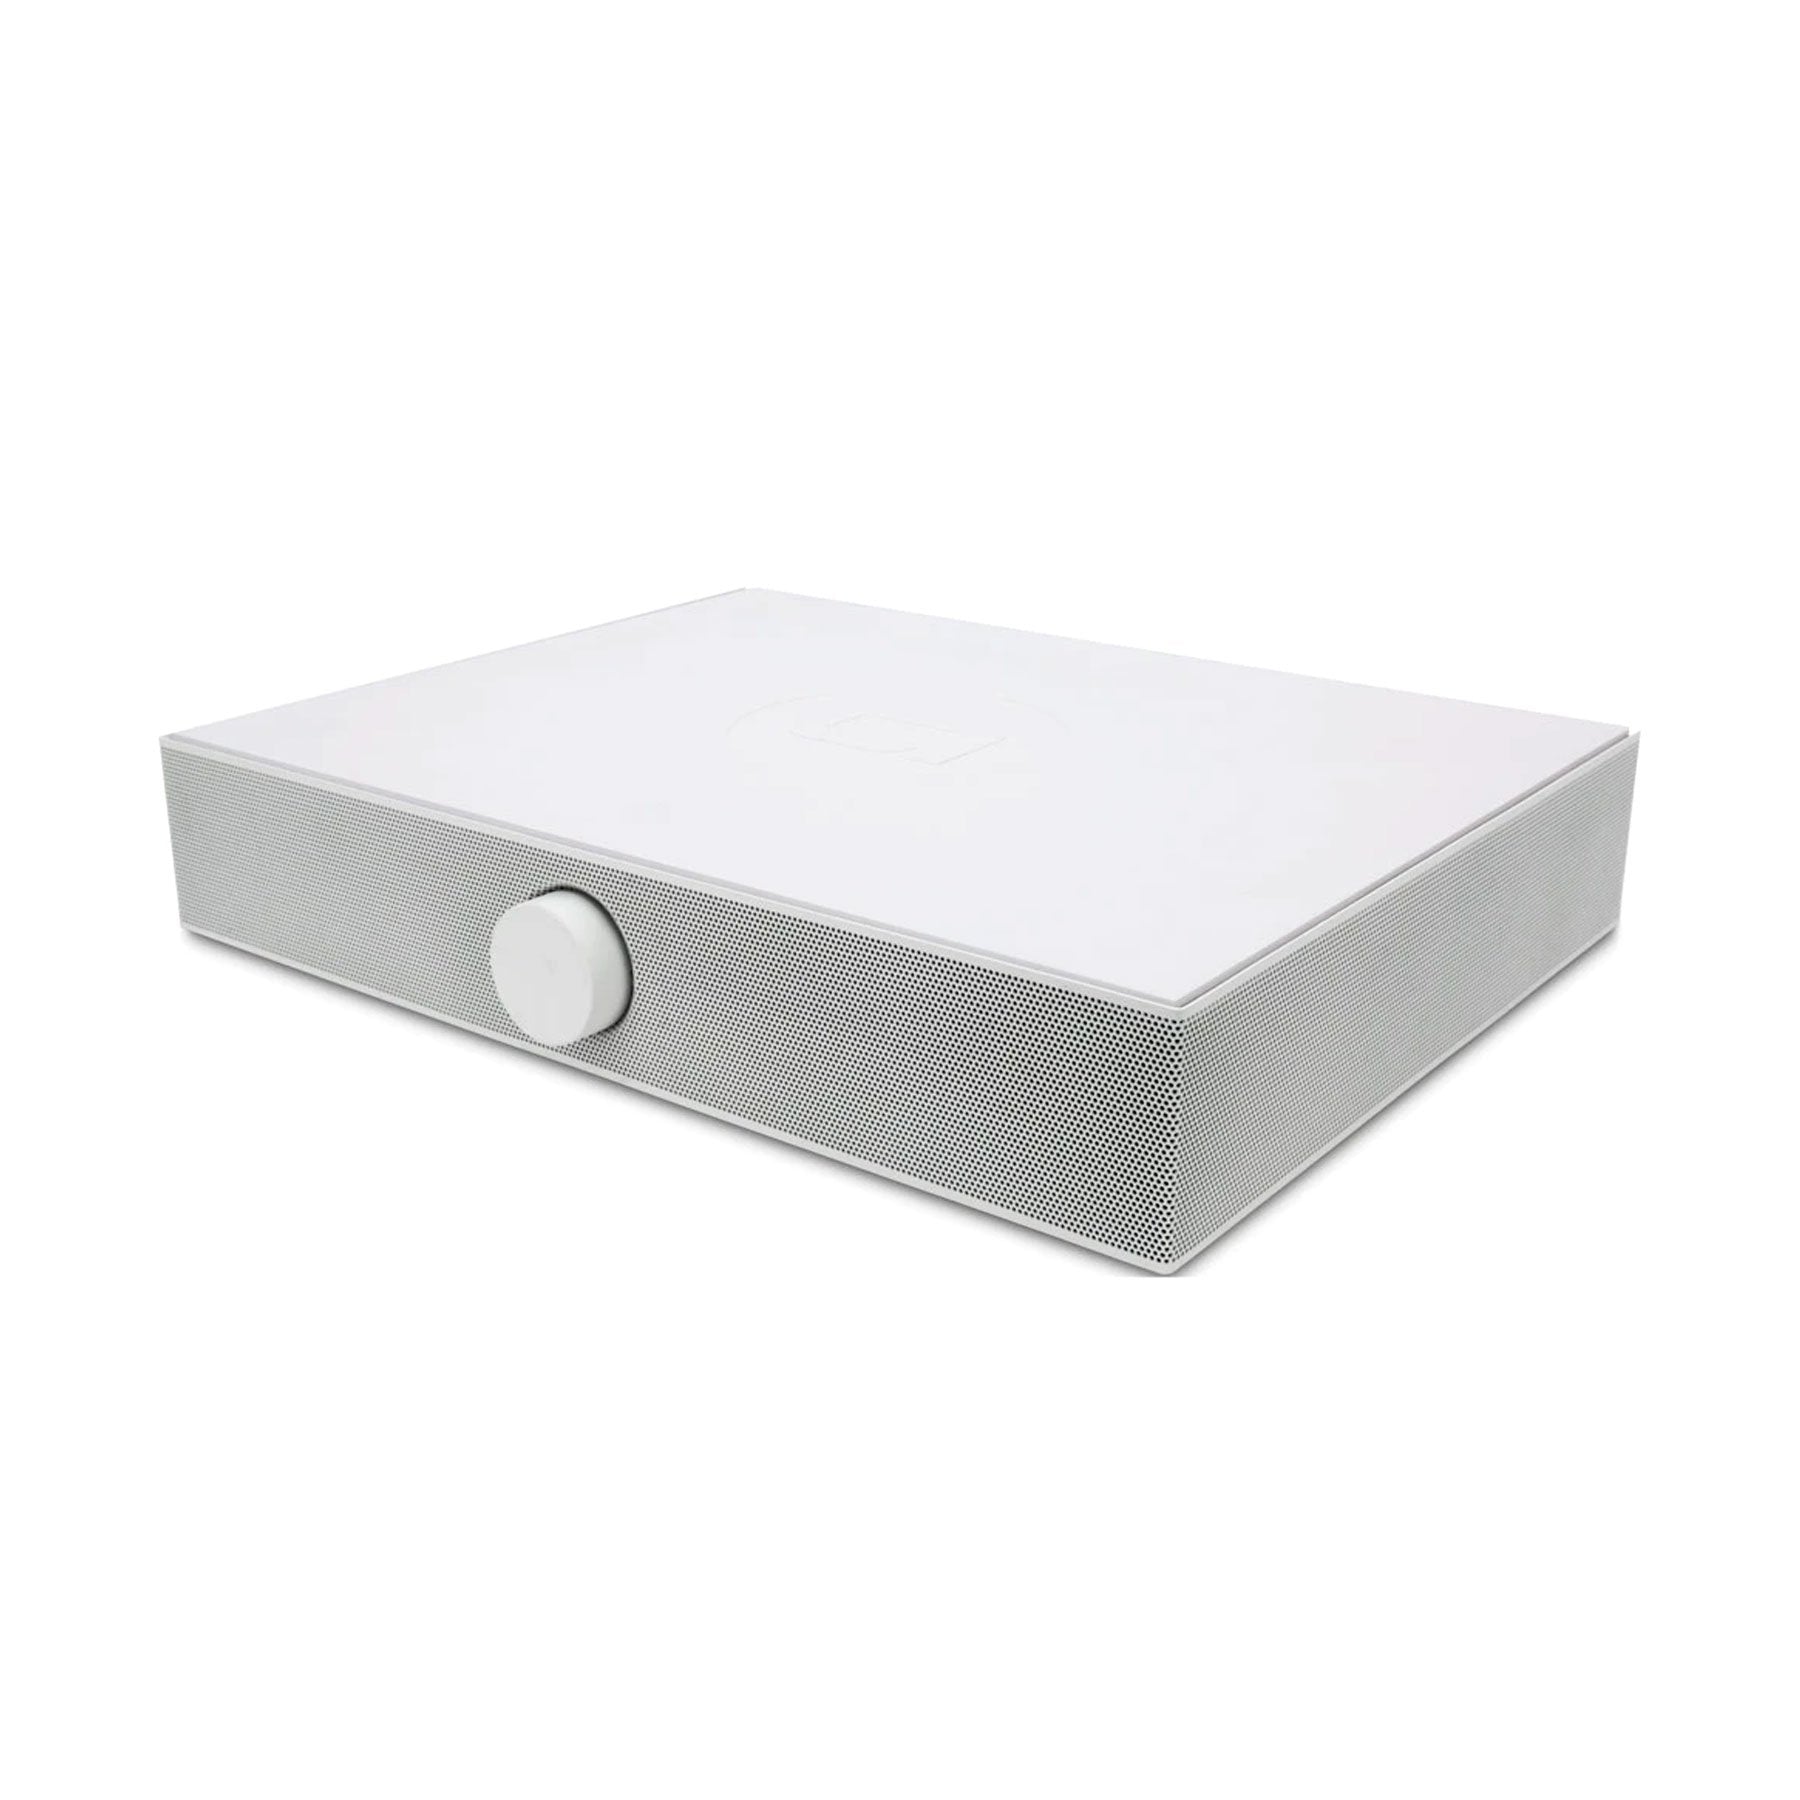 Andover Audio: Spinbase Turntable Speaker System Platform w/Bluetooth - White